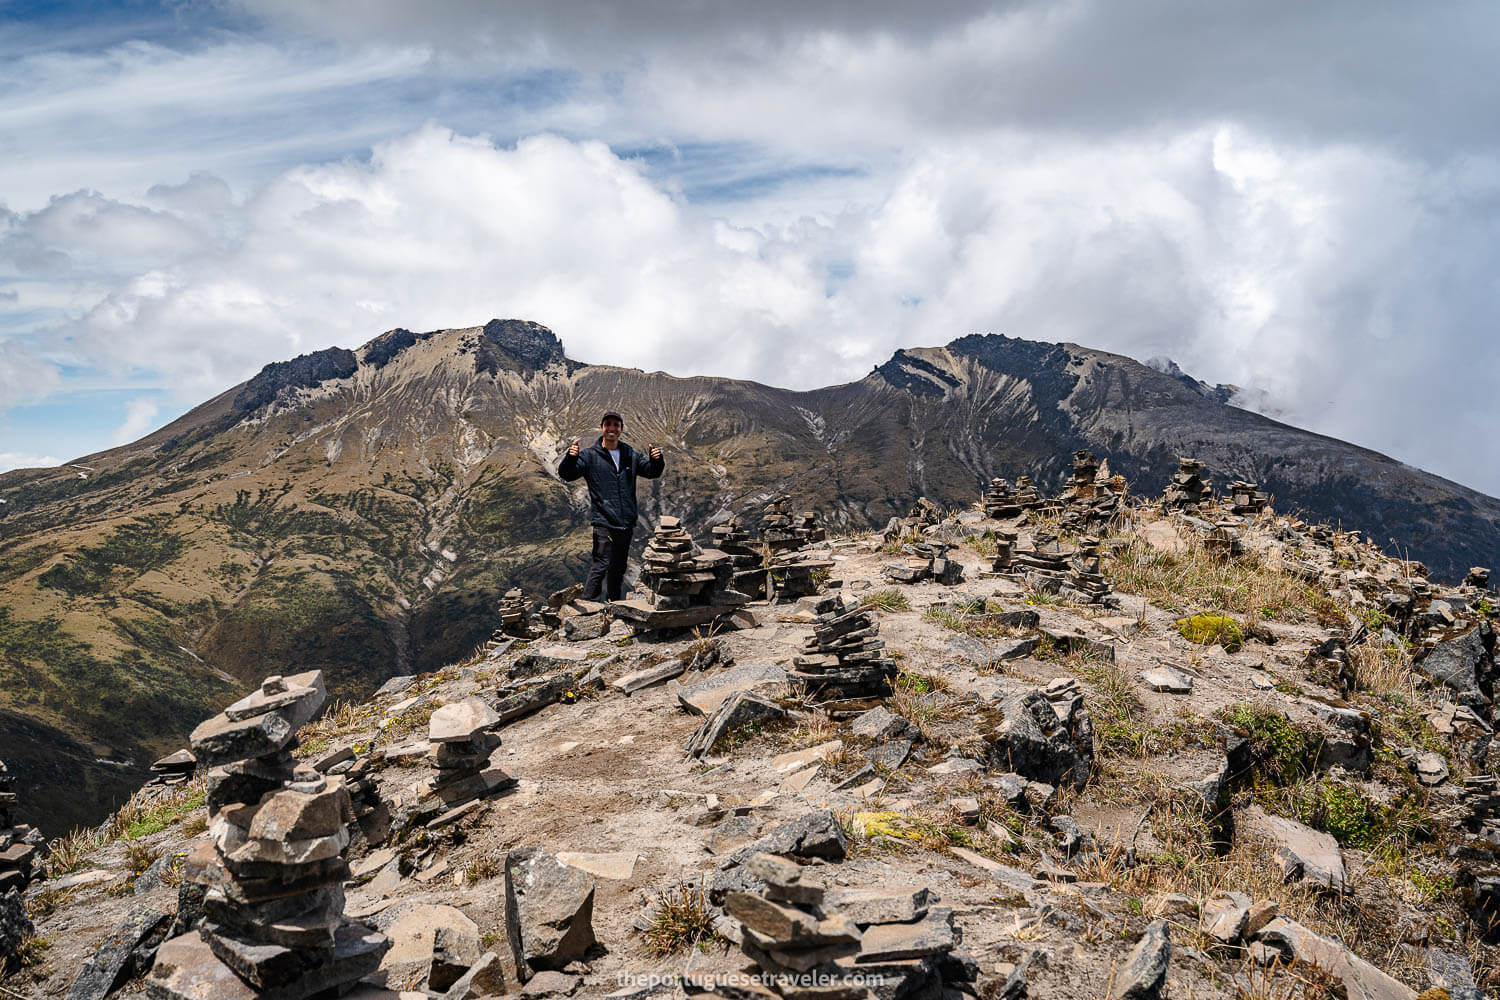 Dani, from Mauna Expeditions in Cerro Ladrillos with Guagua Pichincha behind